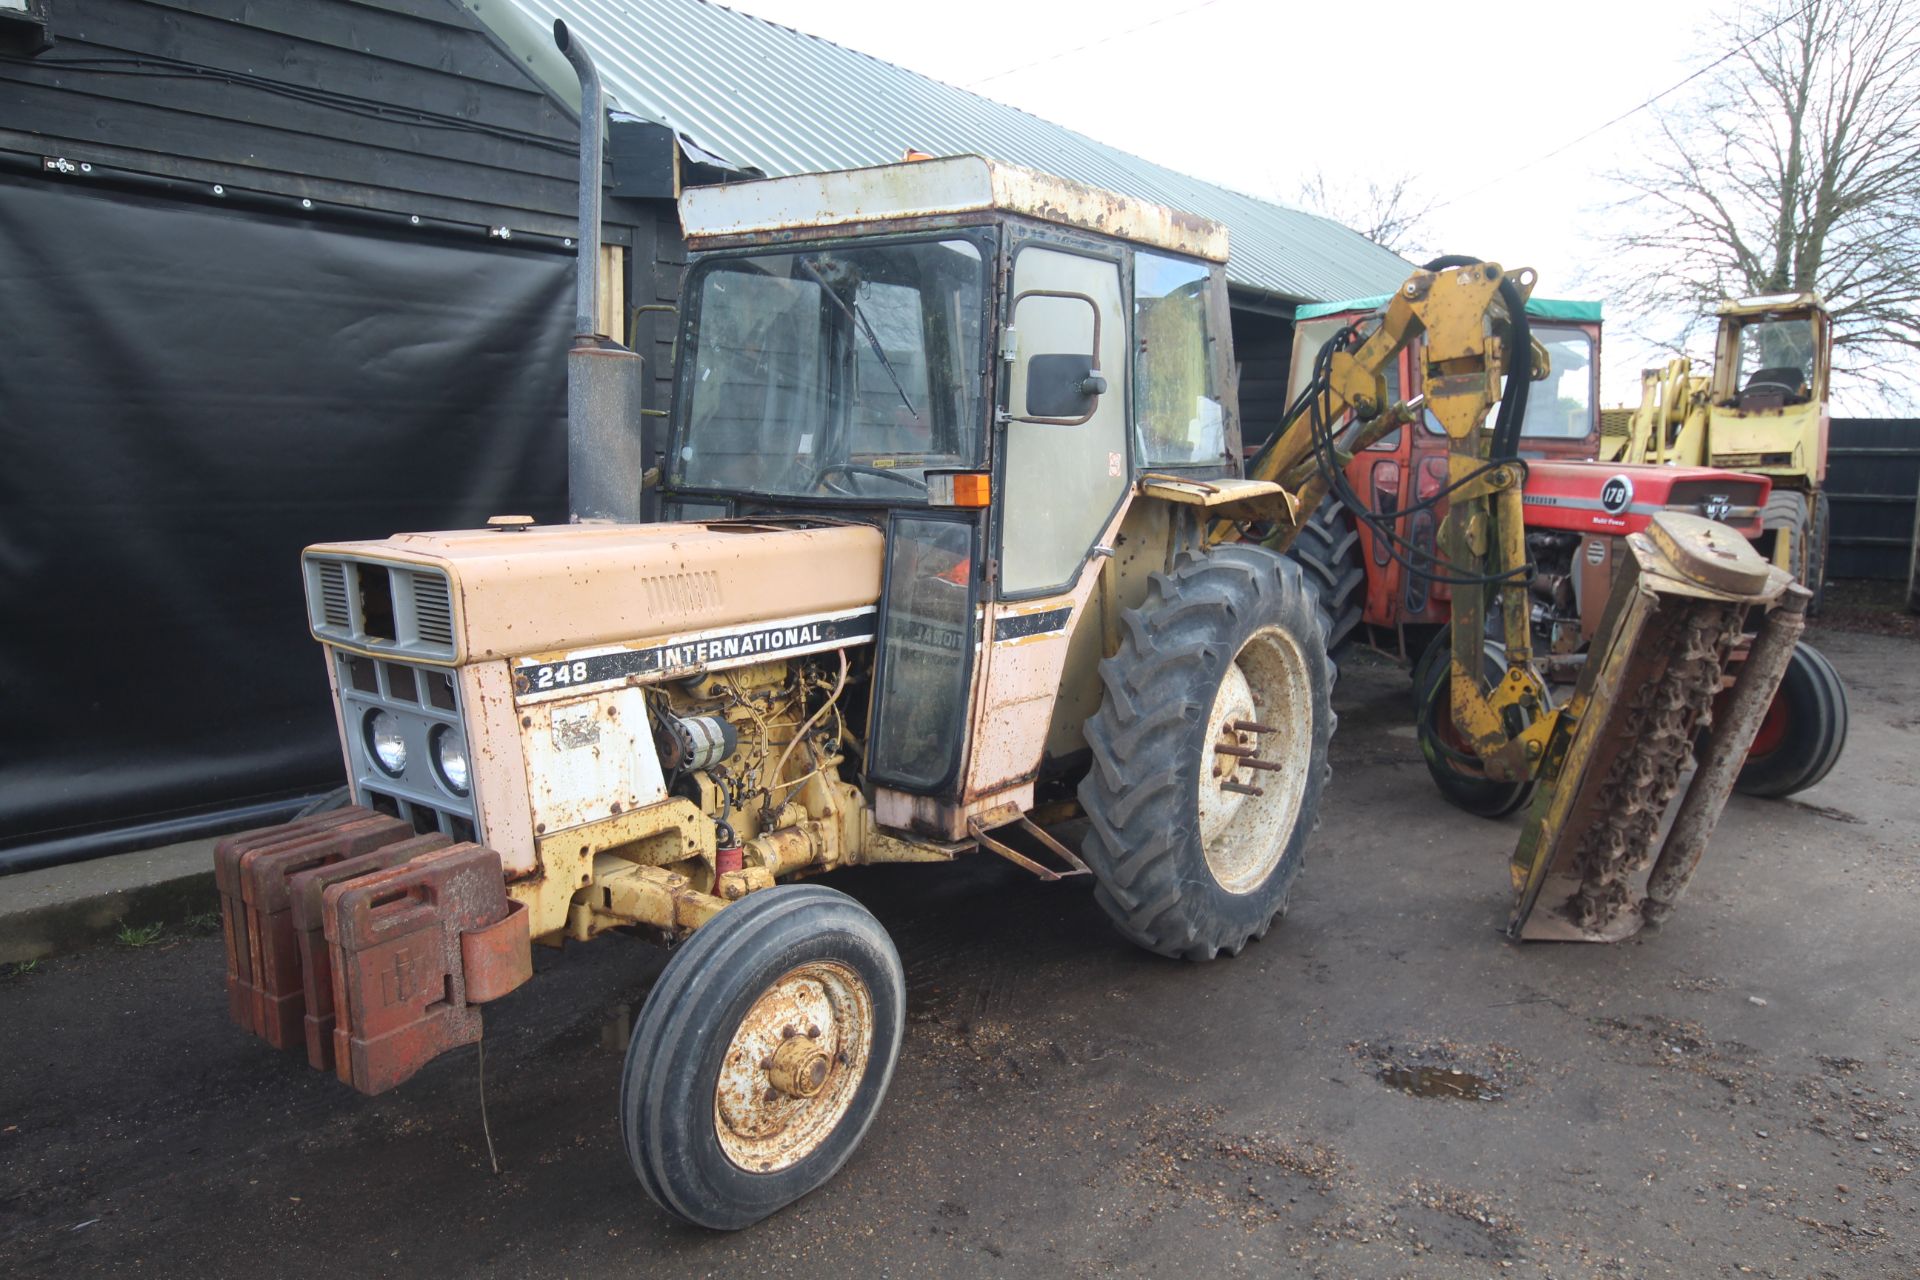 International 248 2WD tractor. Registration SPV 499W. Date of first registration 01/06/1981. Showing